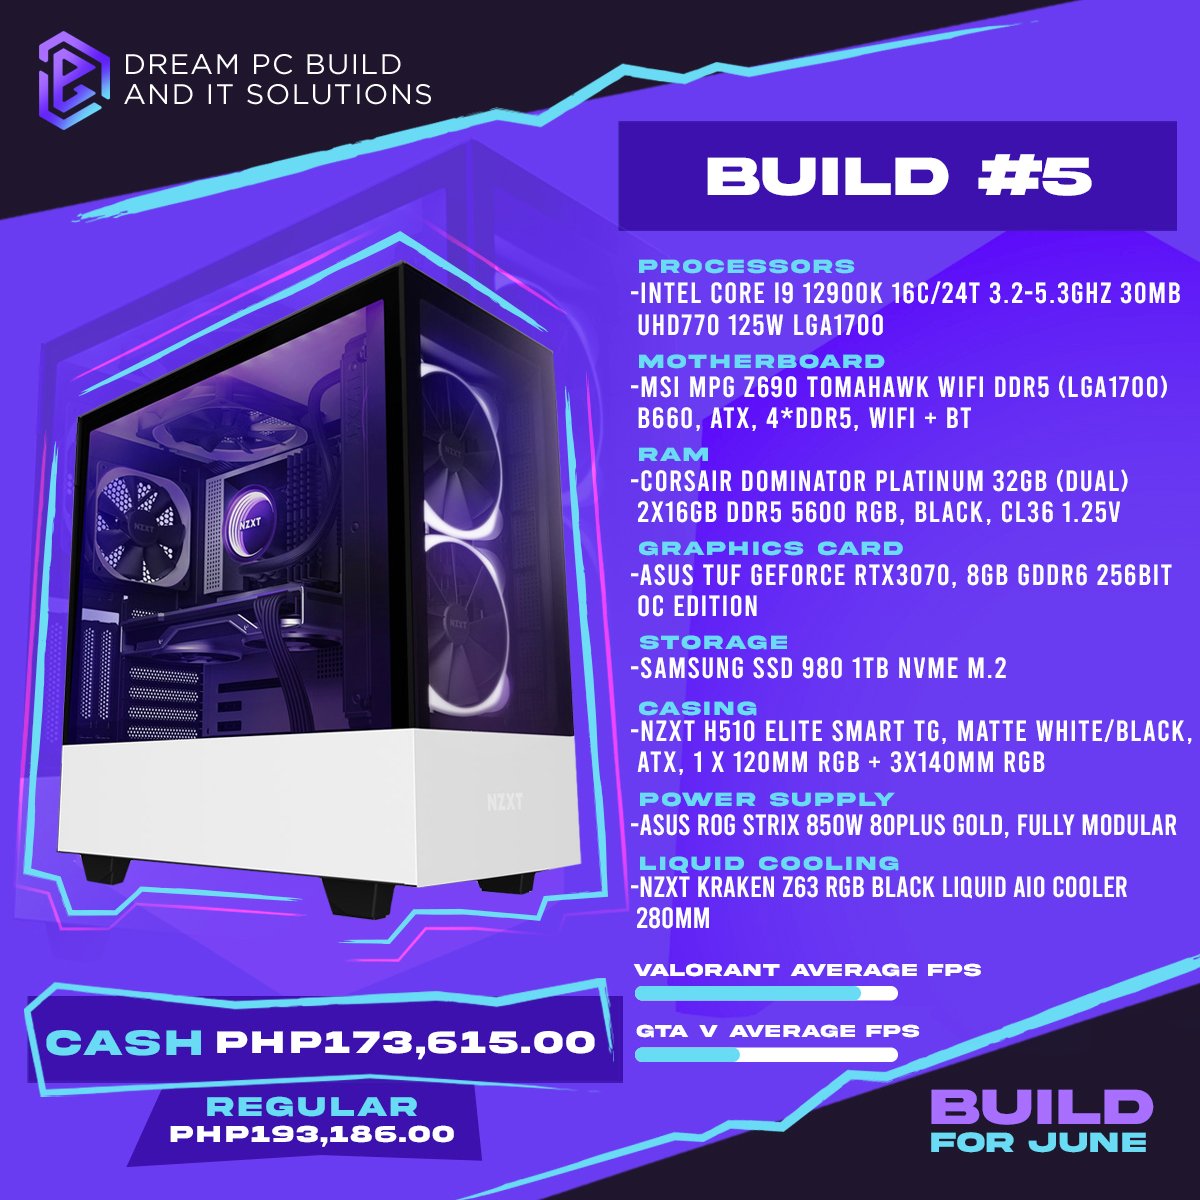 Dream PC Build - Build for June - Build #5